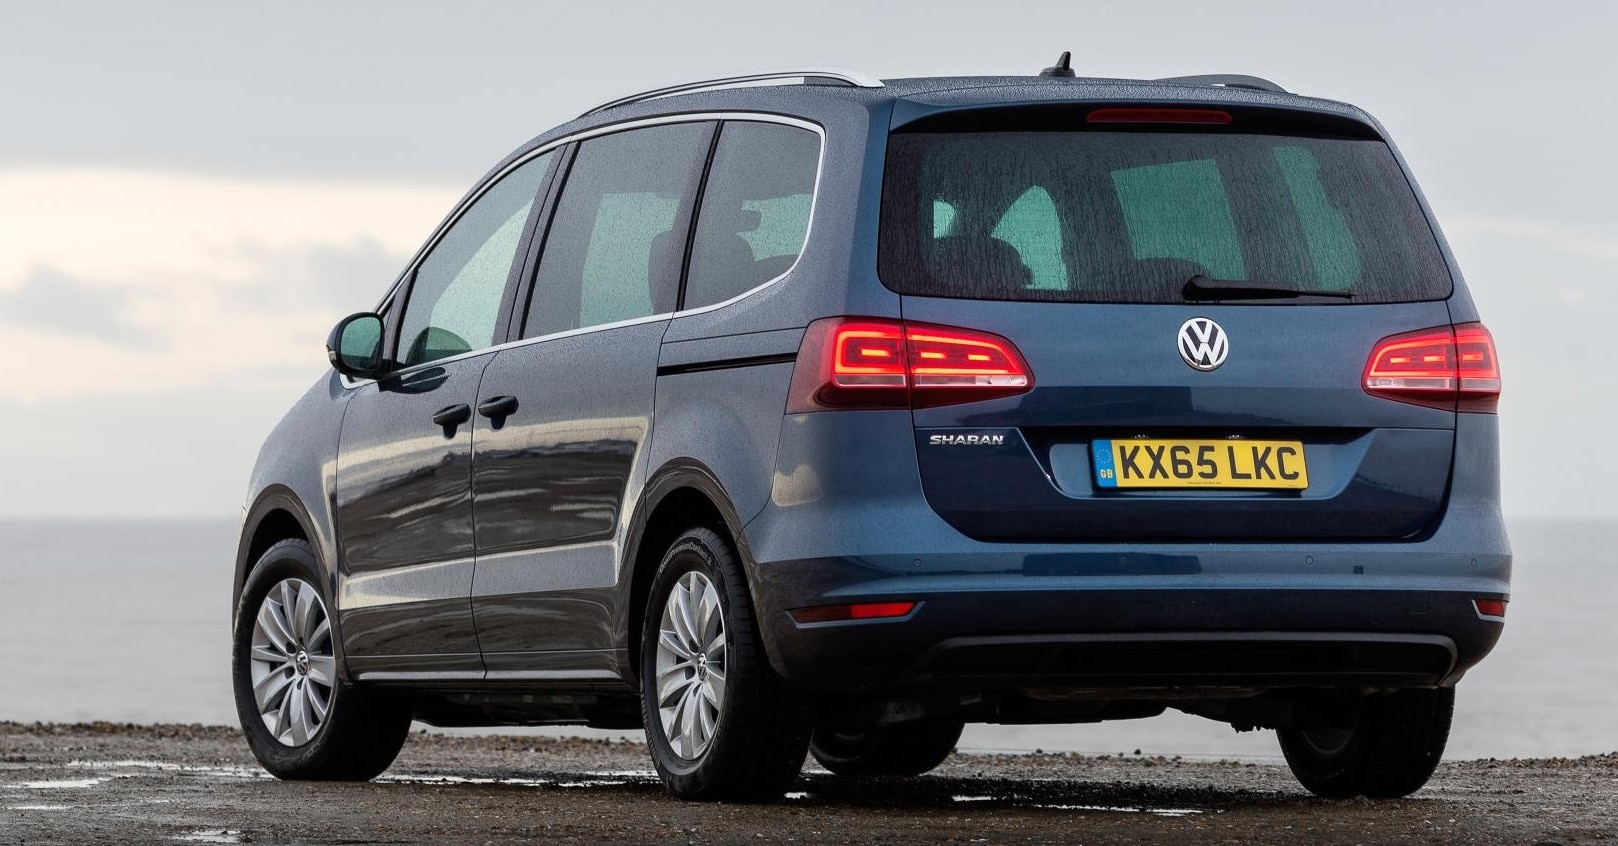 The new Volkswagen Sharan makes business sense